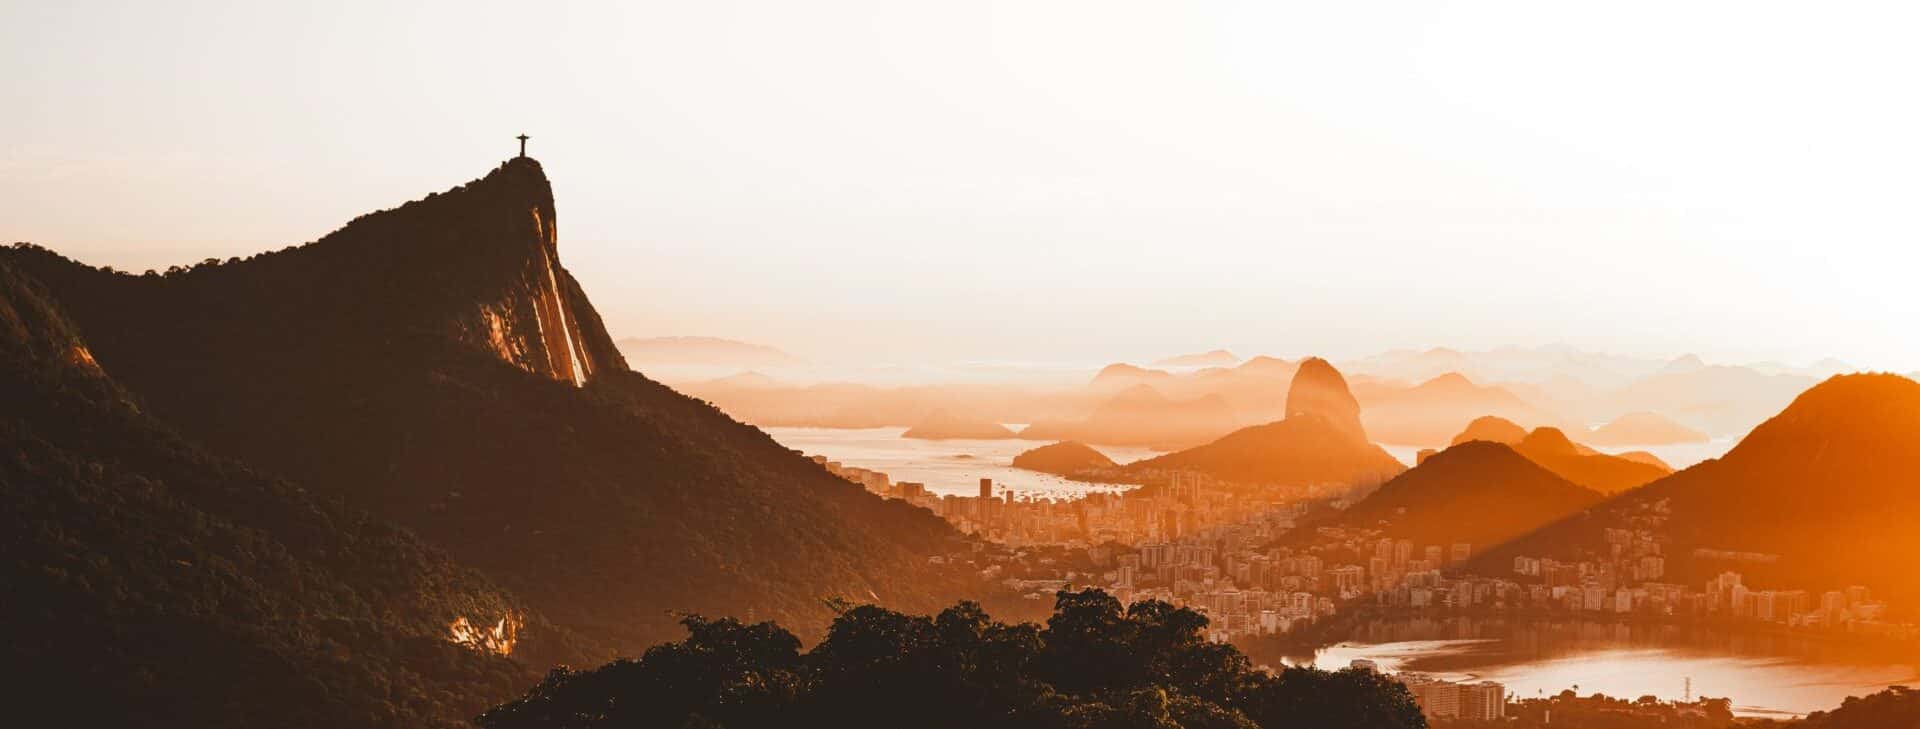 Sunset in Rio de Janeiro brazil